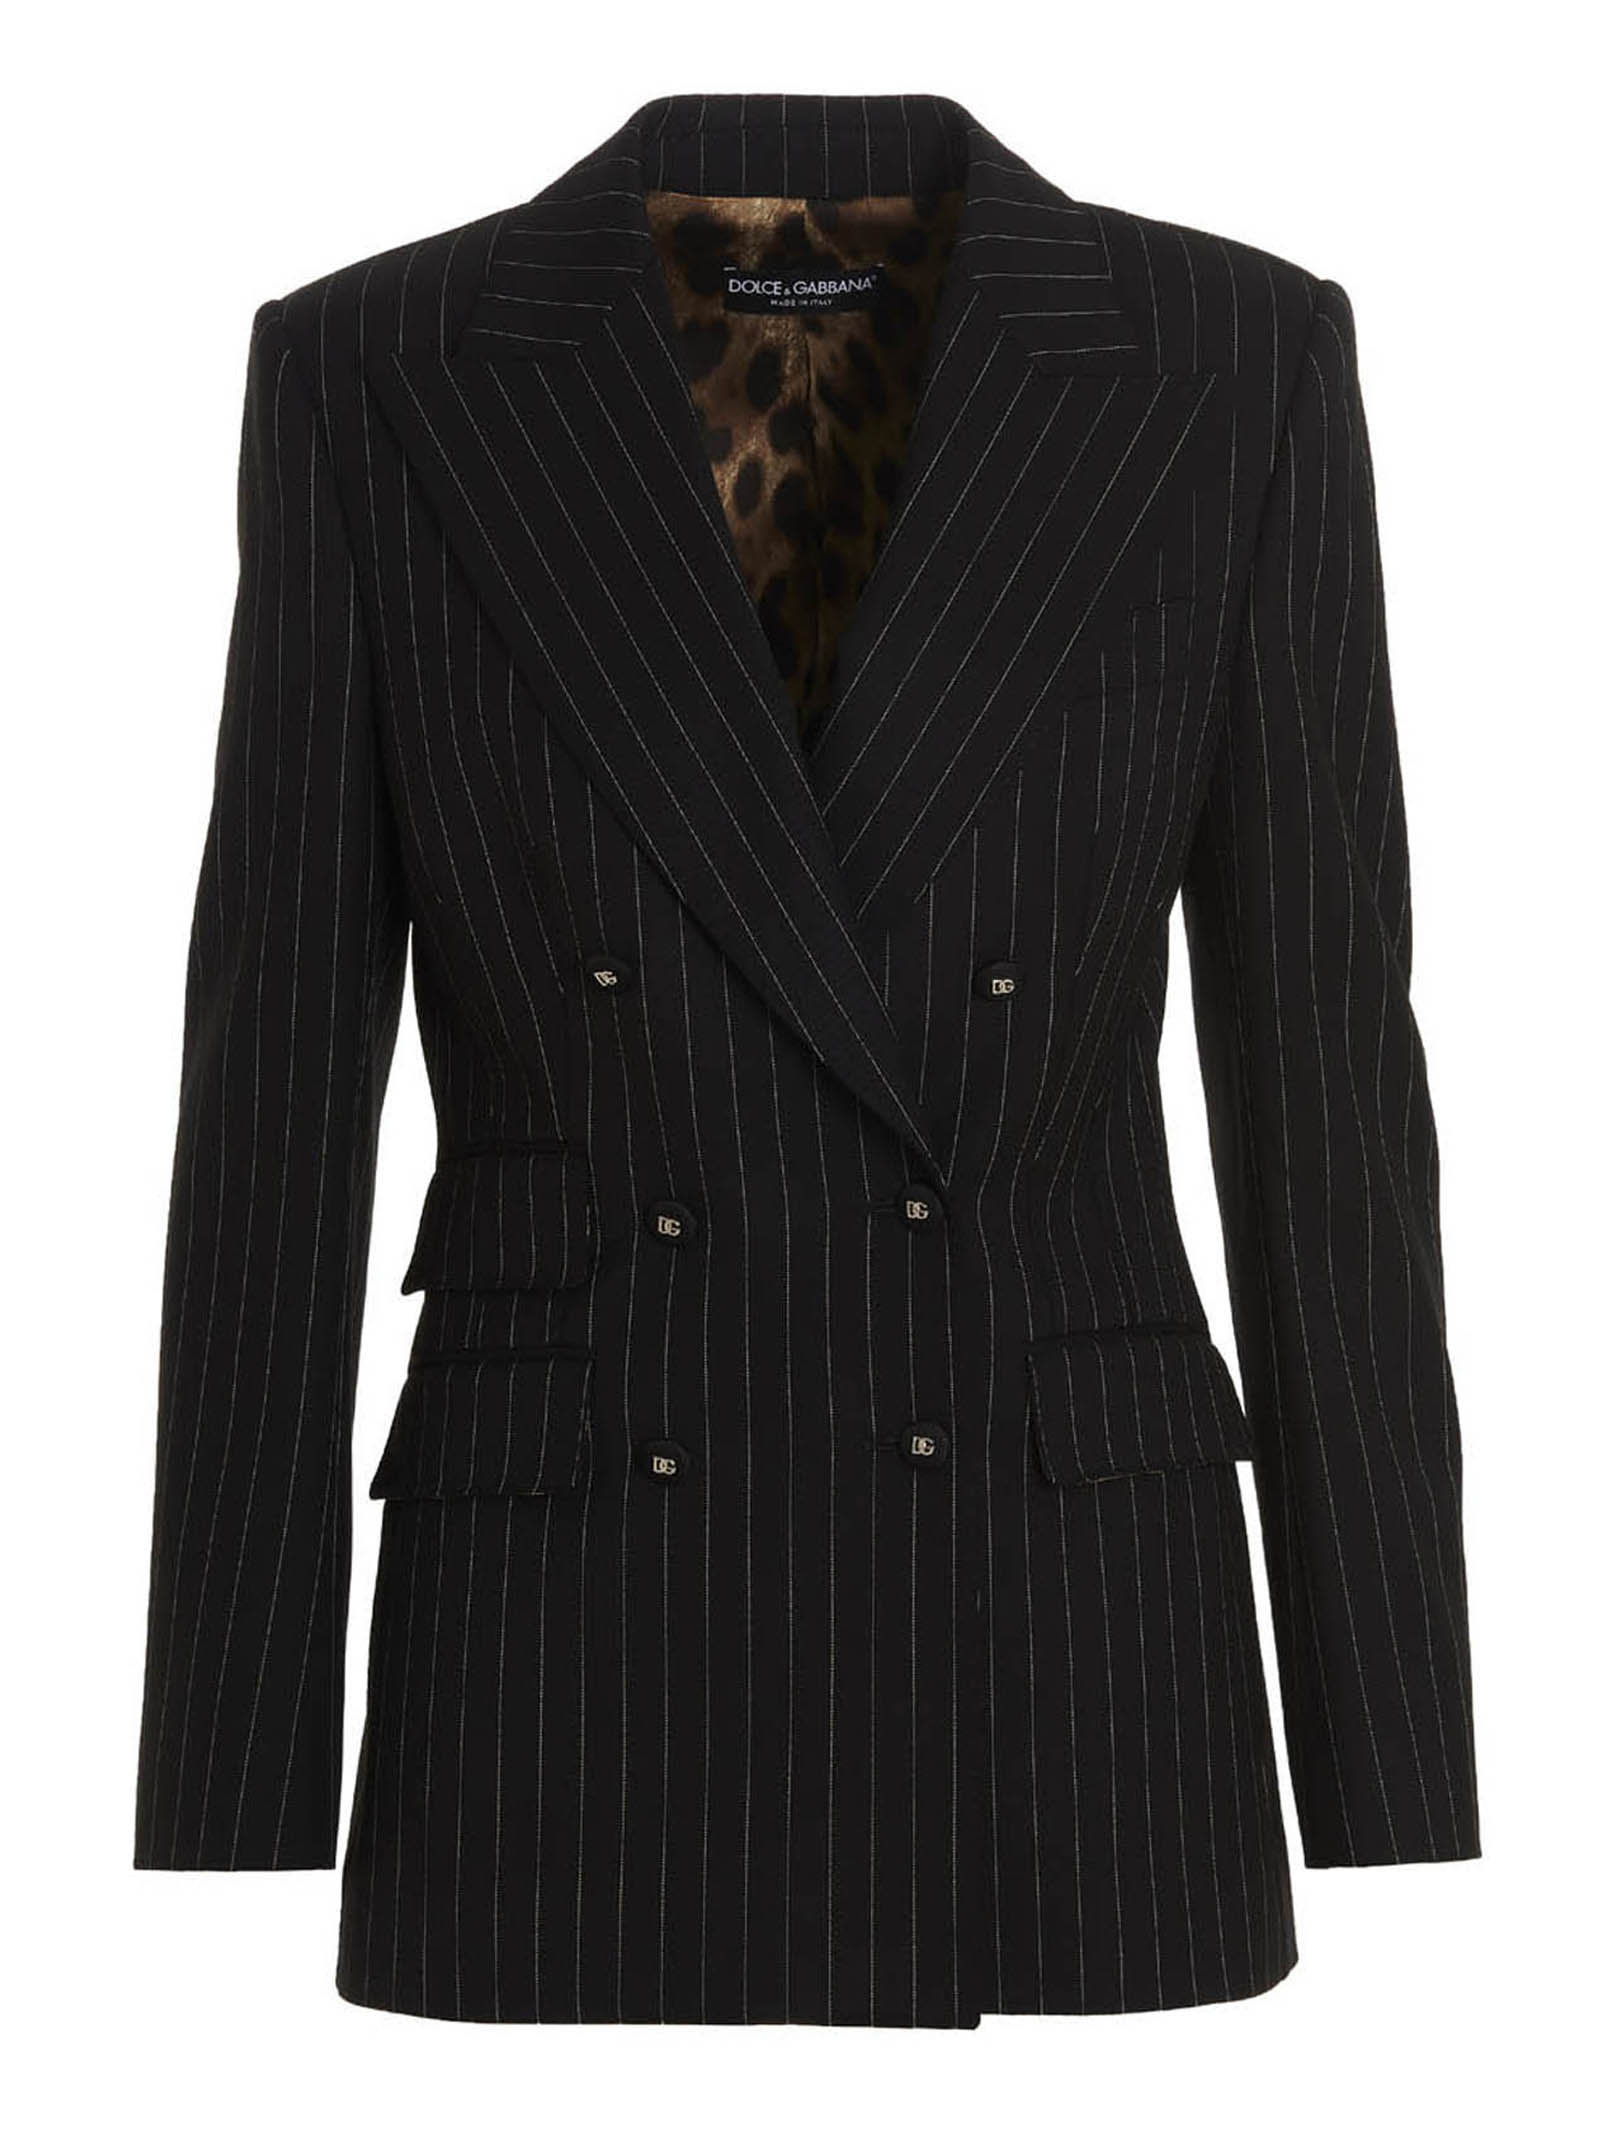 Dolce & Gabbana Pinstripe Blazer Jacket